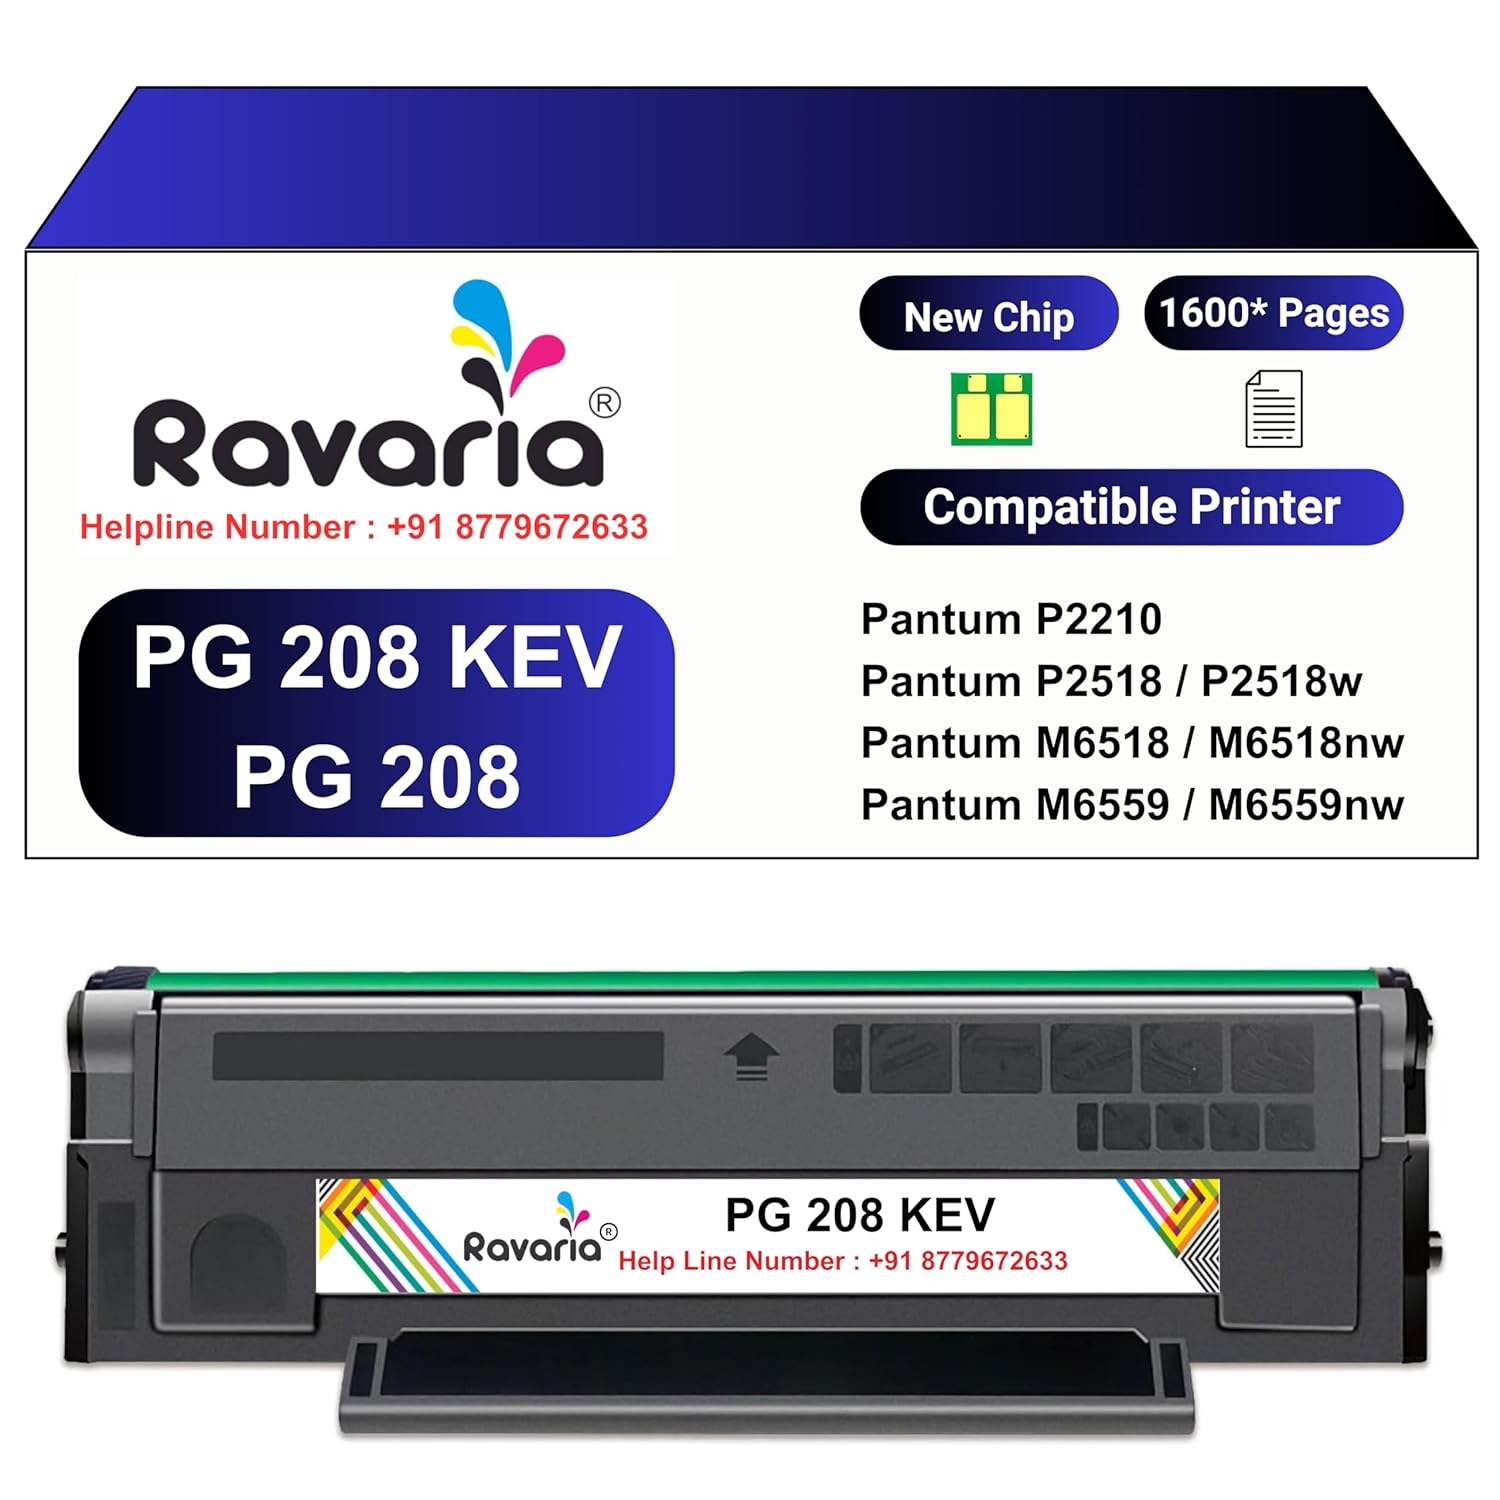 Ravaria Compatible Toner Cartridge for Pantum PG208K / 208k / 208kev Supported Pantum Printer P2210 P2518 P2518w M6518 M6518nw M6559 M6559nw (Ravaria PG 208 KEV Toner Cartridge Pack of 1)